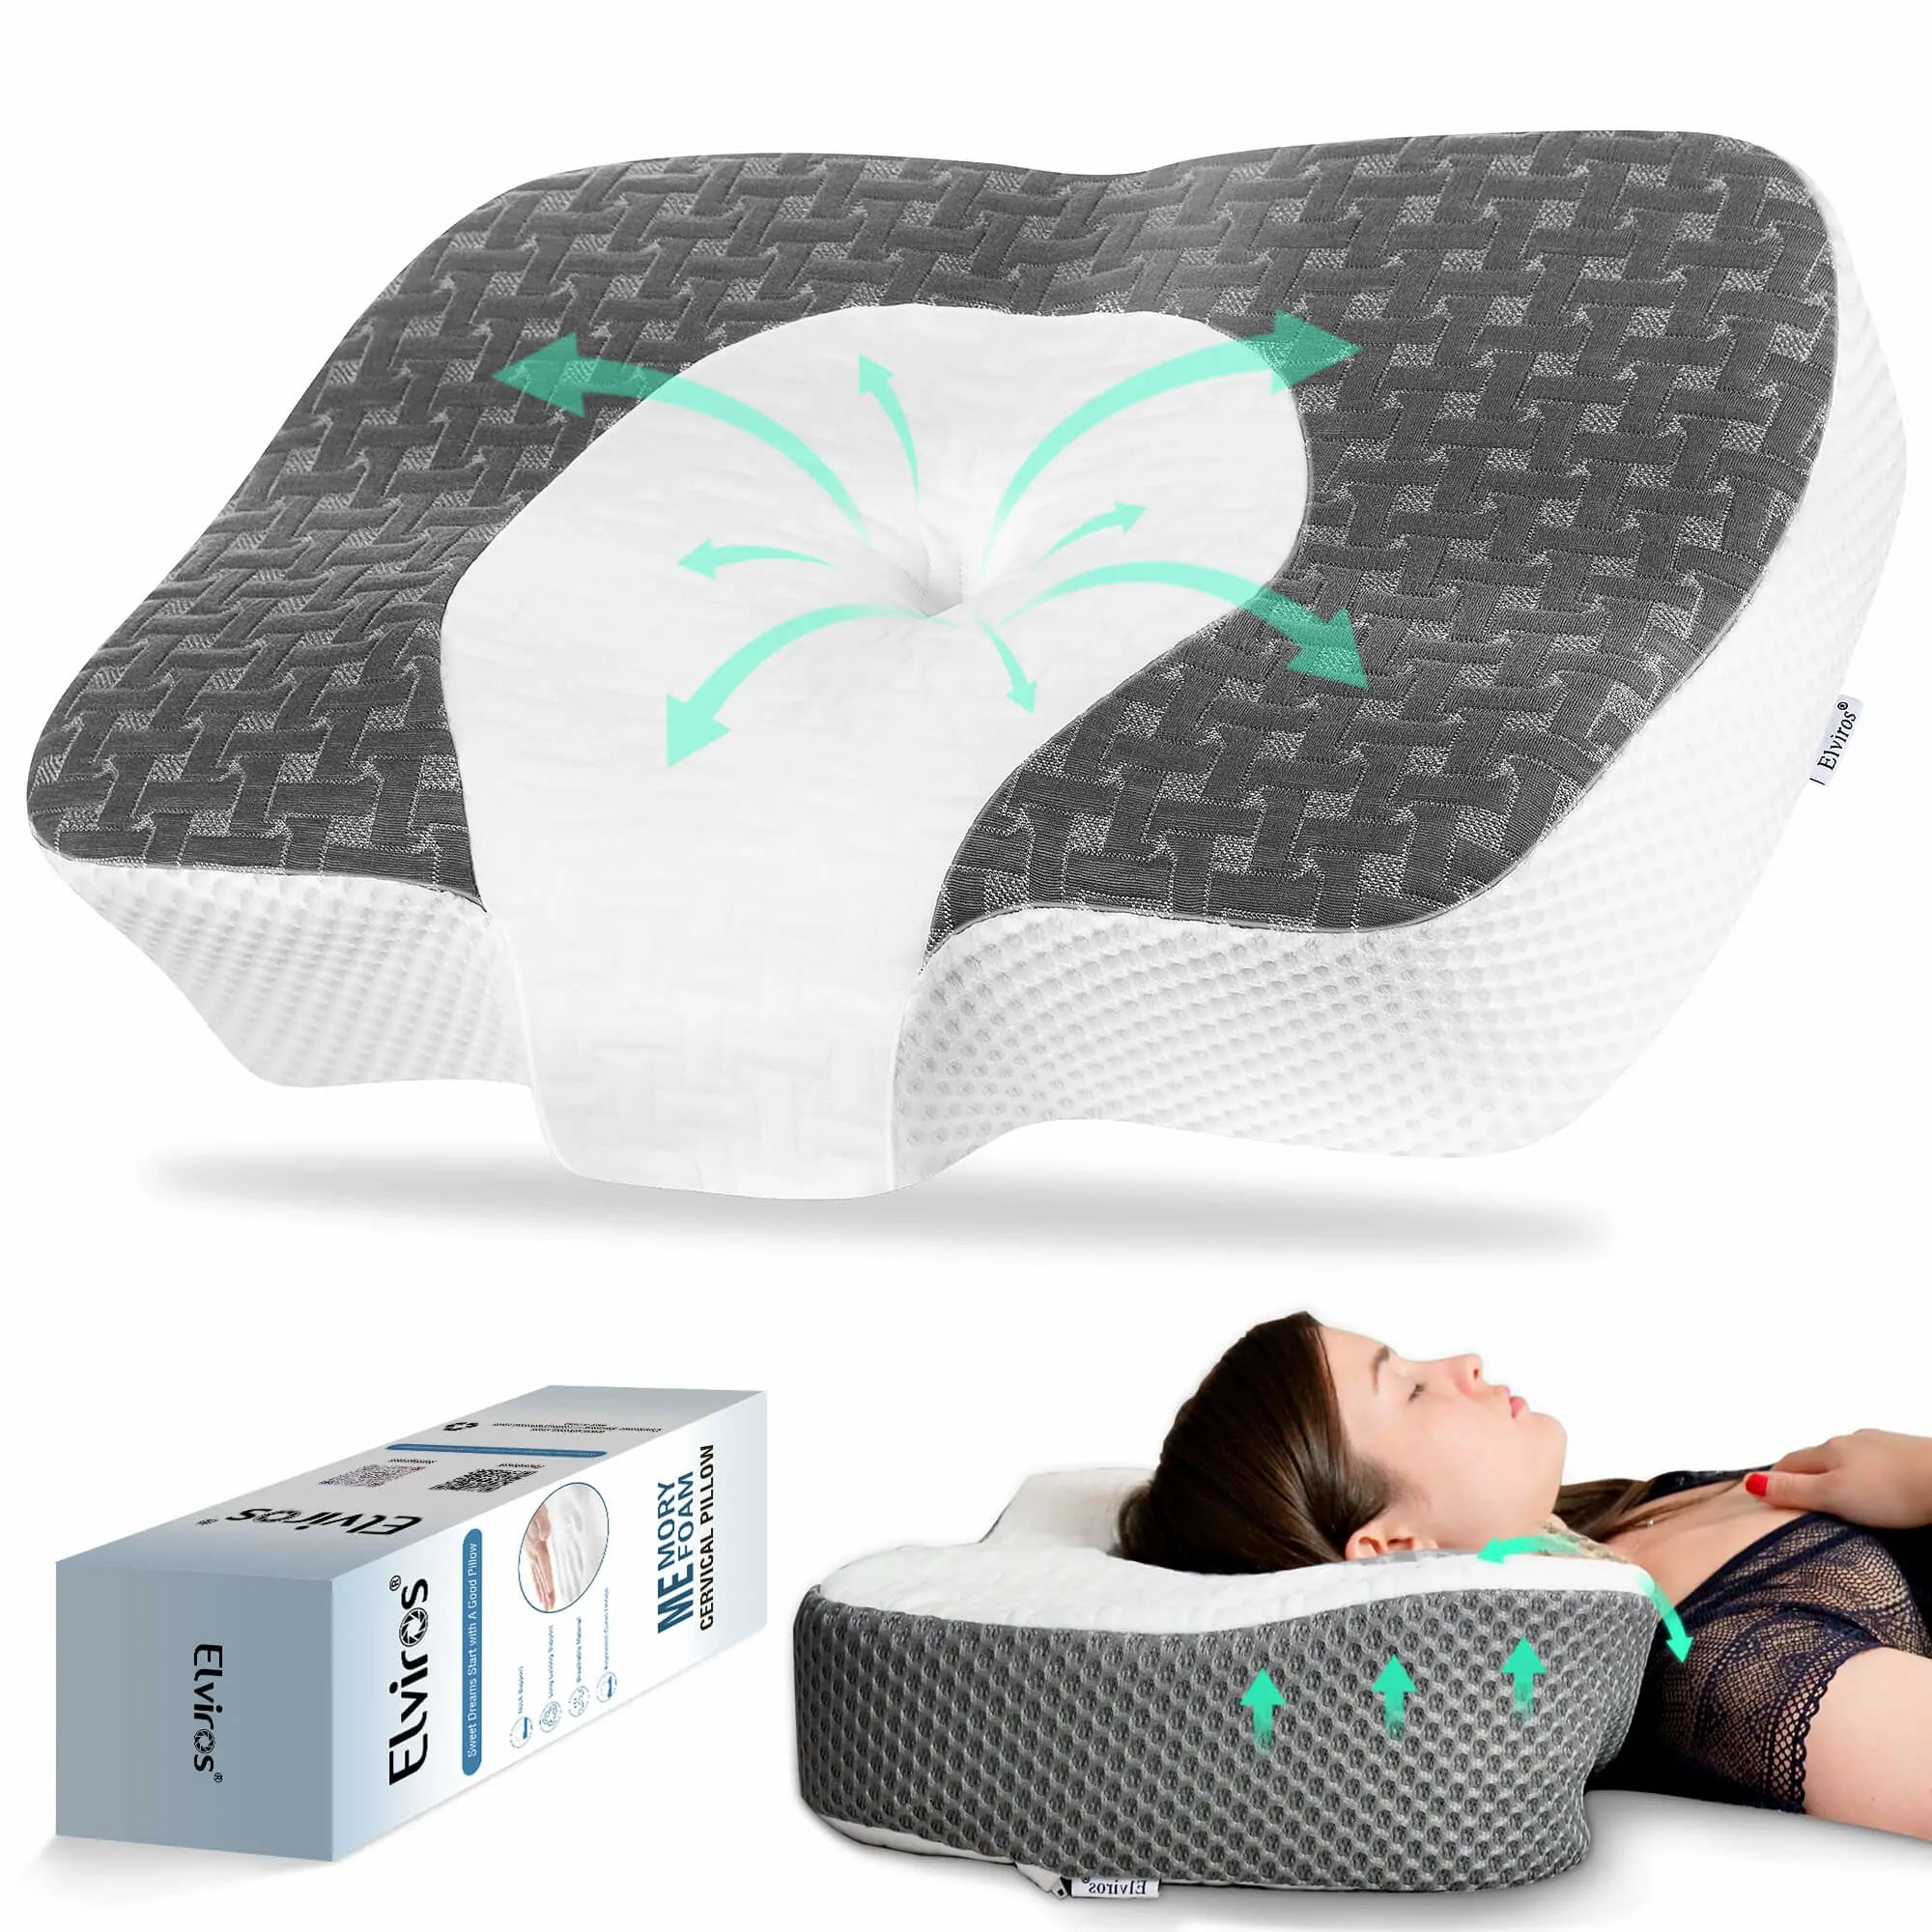 Elviros Contour Orthopedic Pillows for Side Sleepers, Adjustable Ergonomic Bed Pillow Dark Gray / Standard Size